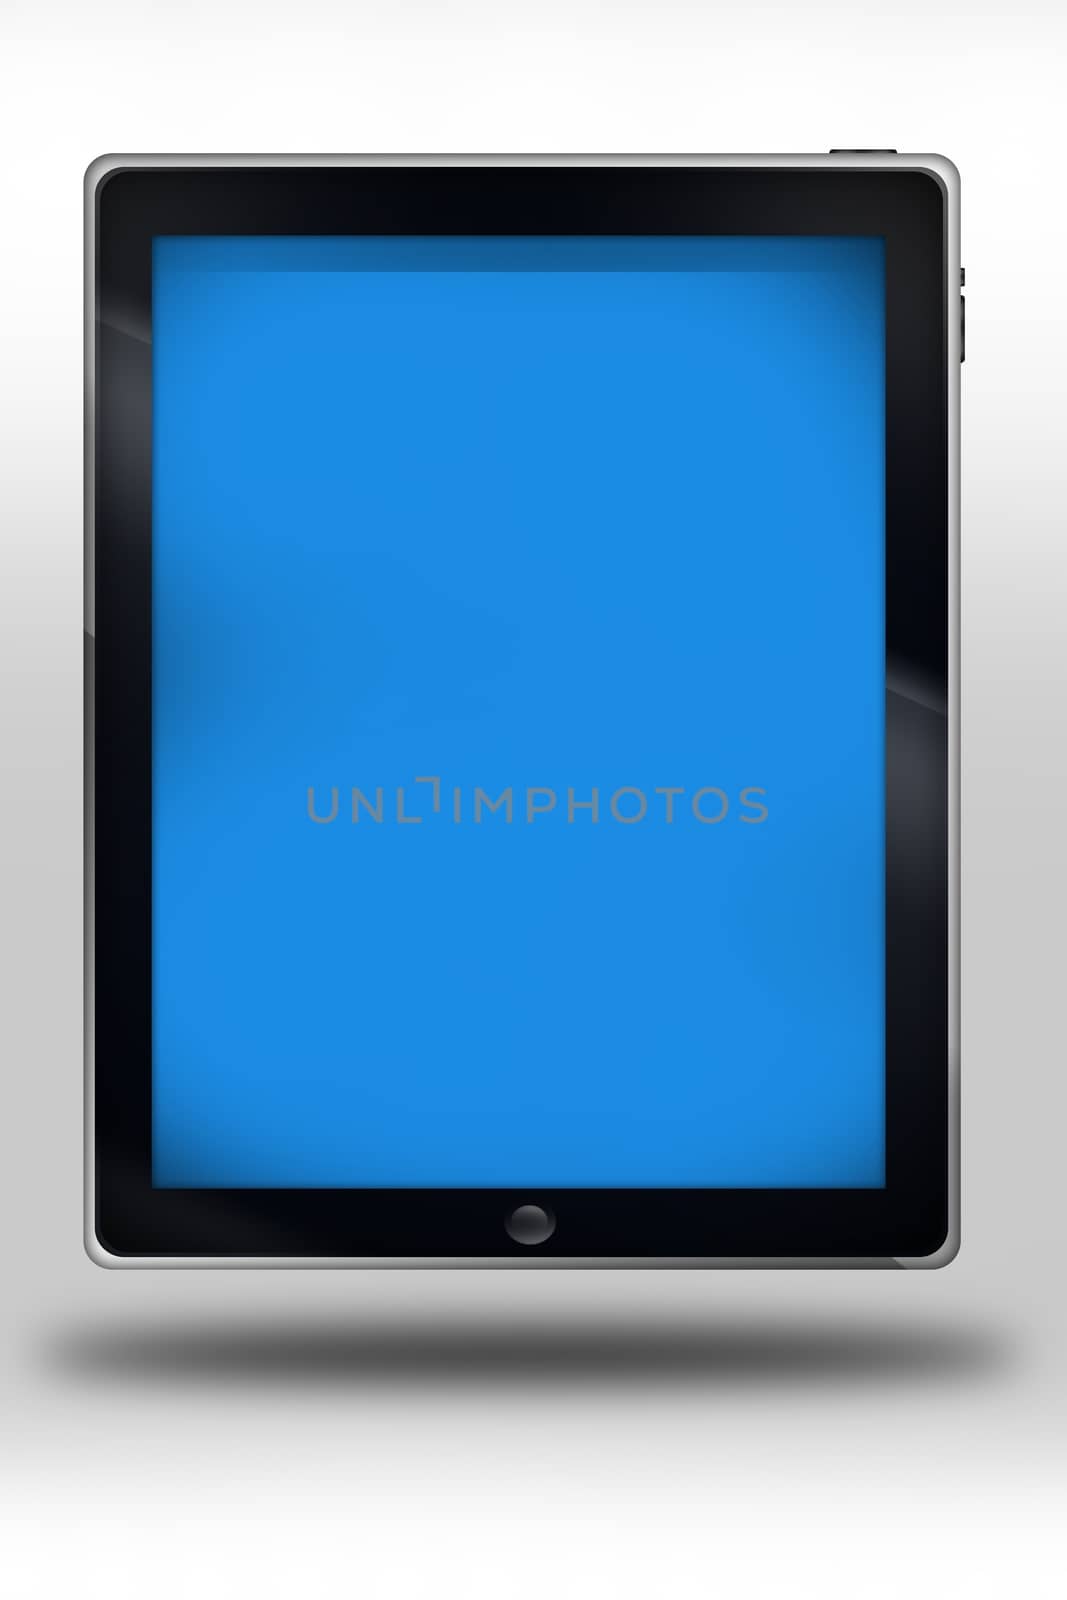 Modern Tablet Computer Illustration. Elegant Clean Design. Empty Blue Screen. Mobile Computer Technology Collection.